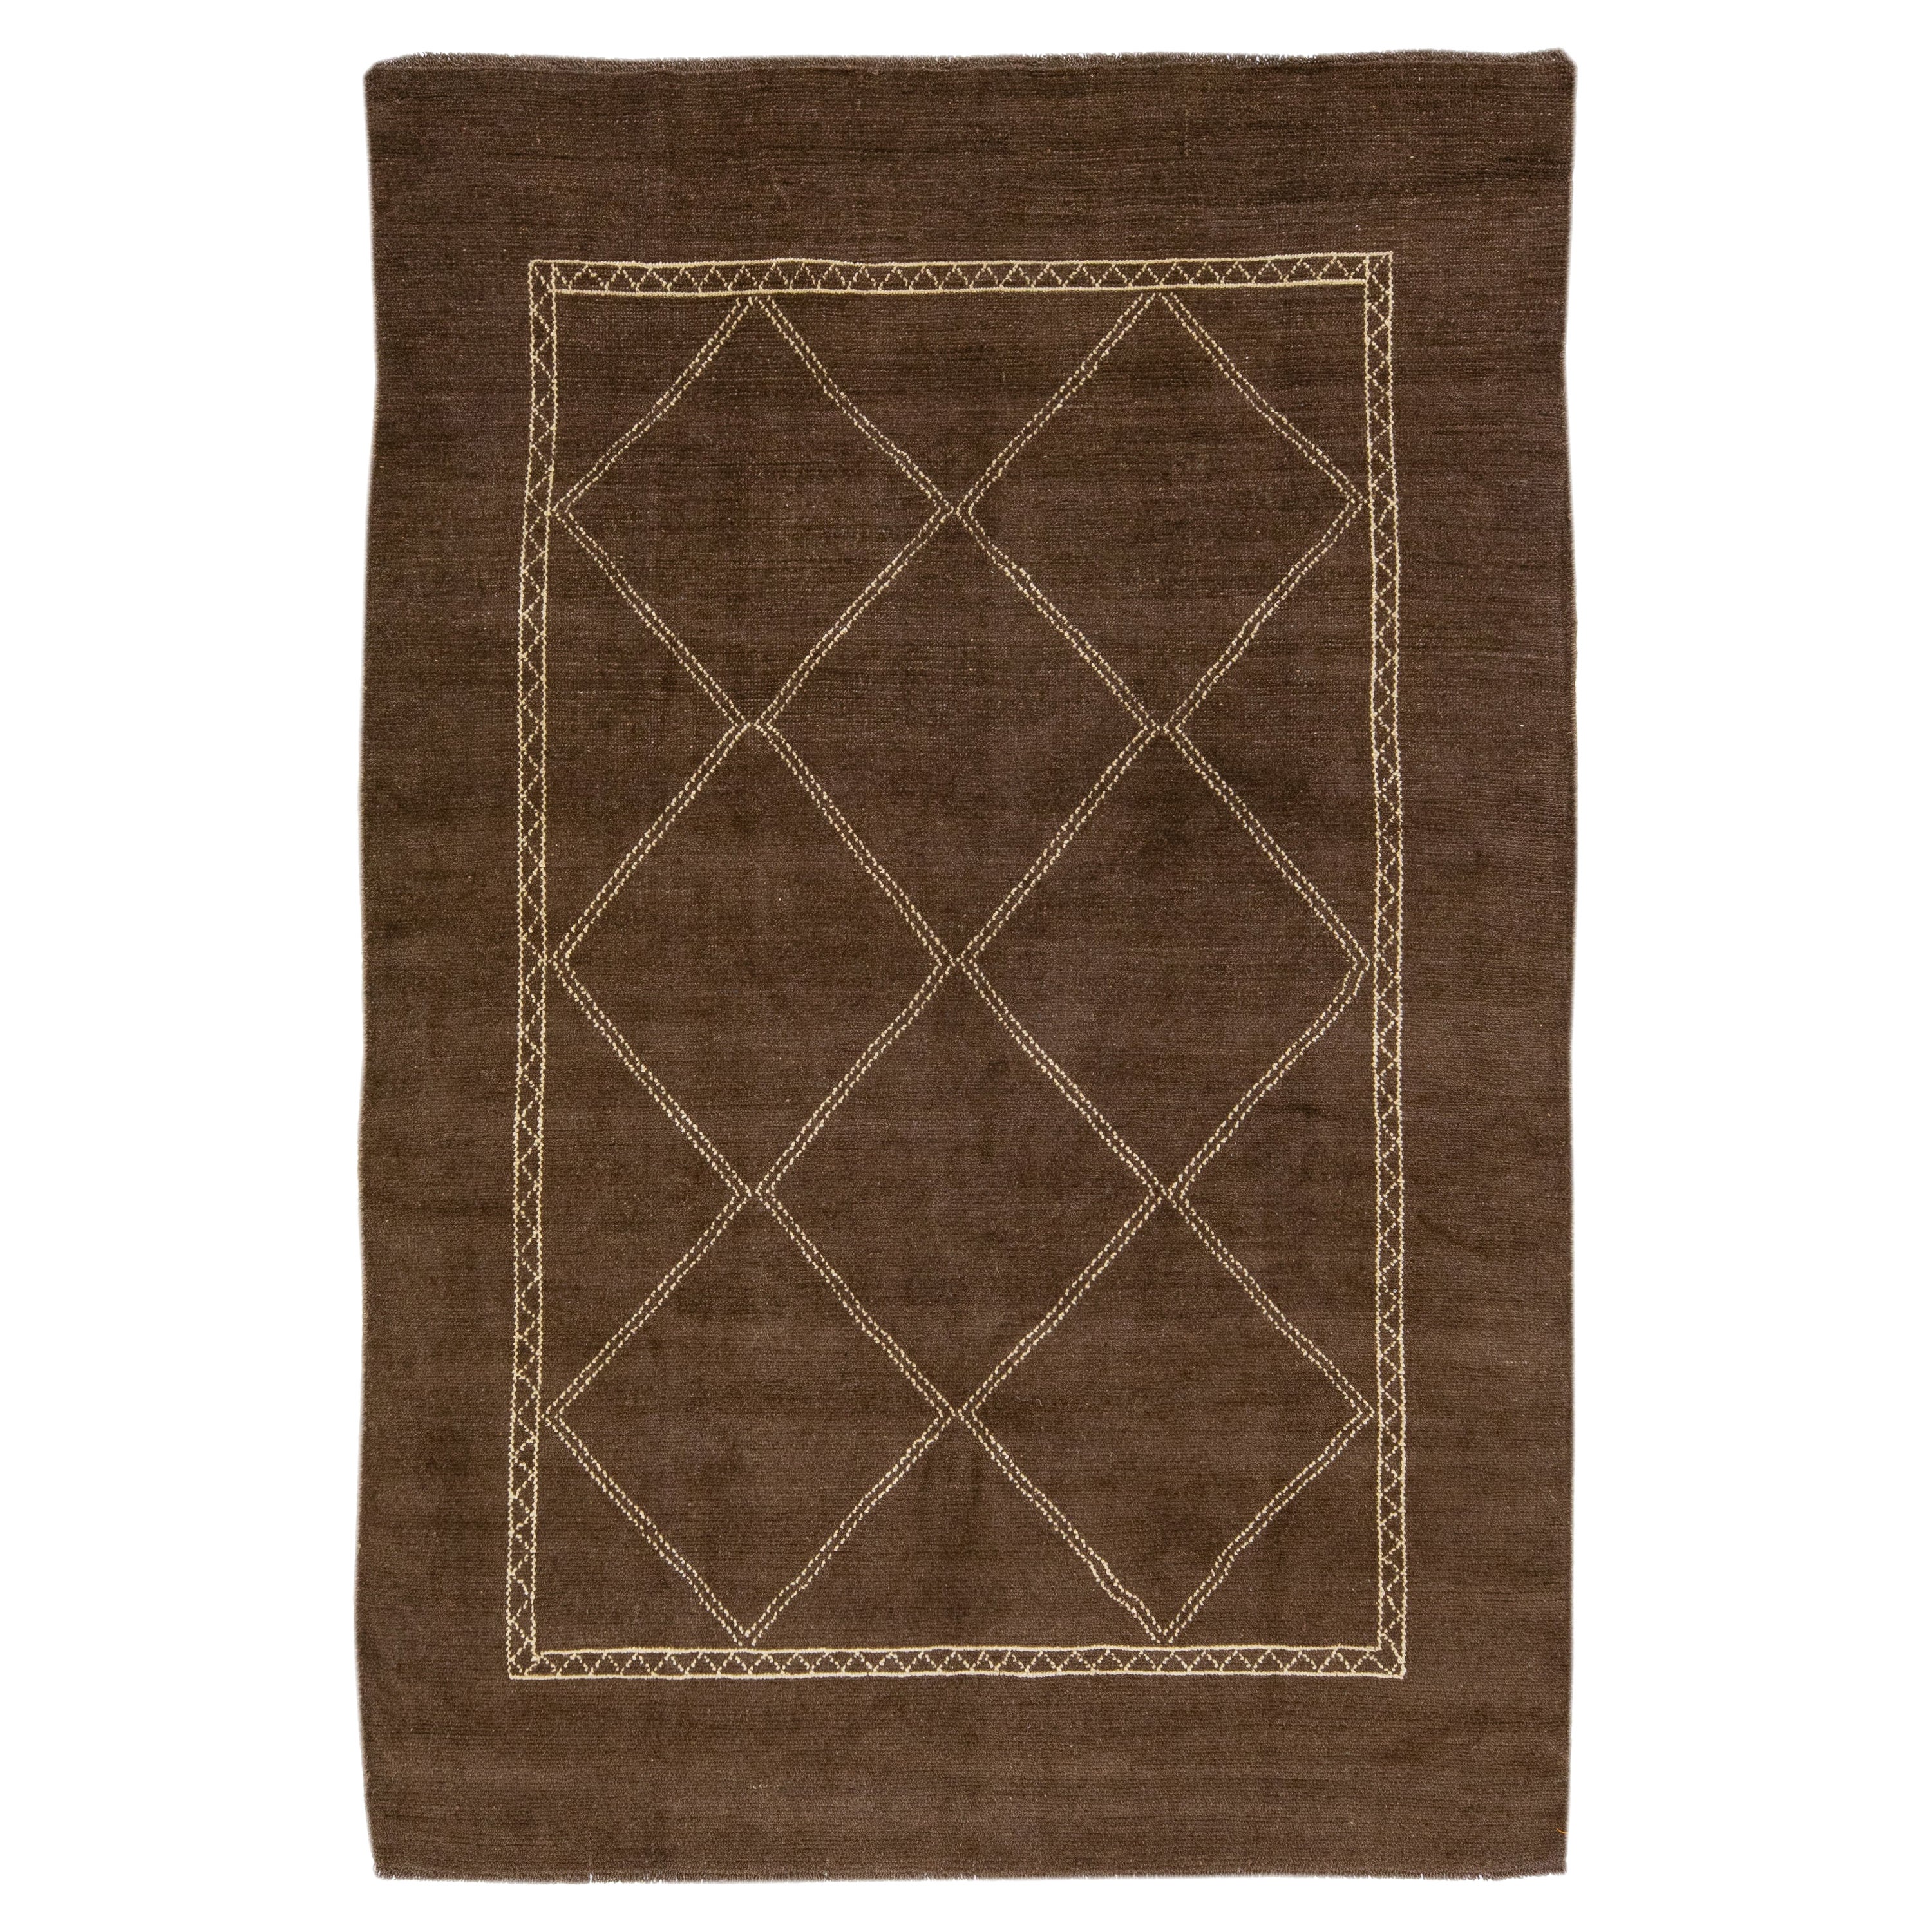 Brown Modern Moroccan Style Handmade Wool Rug with Tribal Design by Apadana